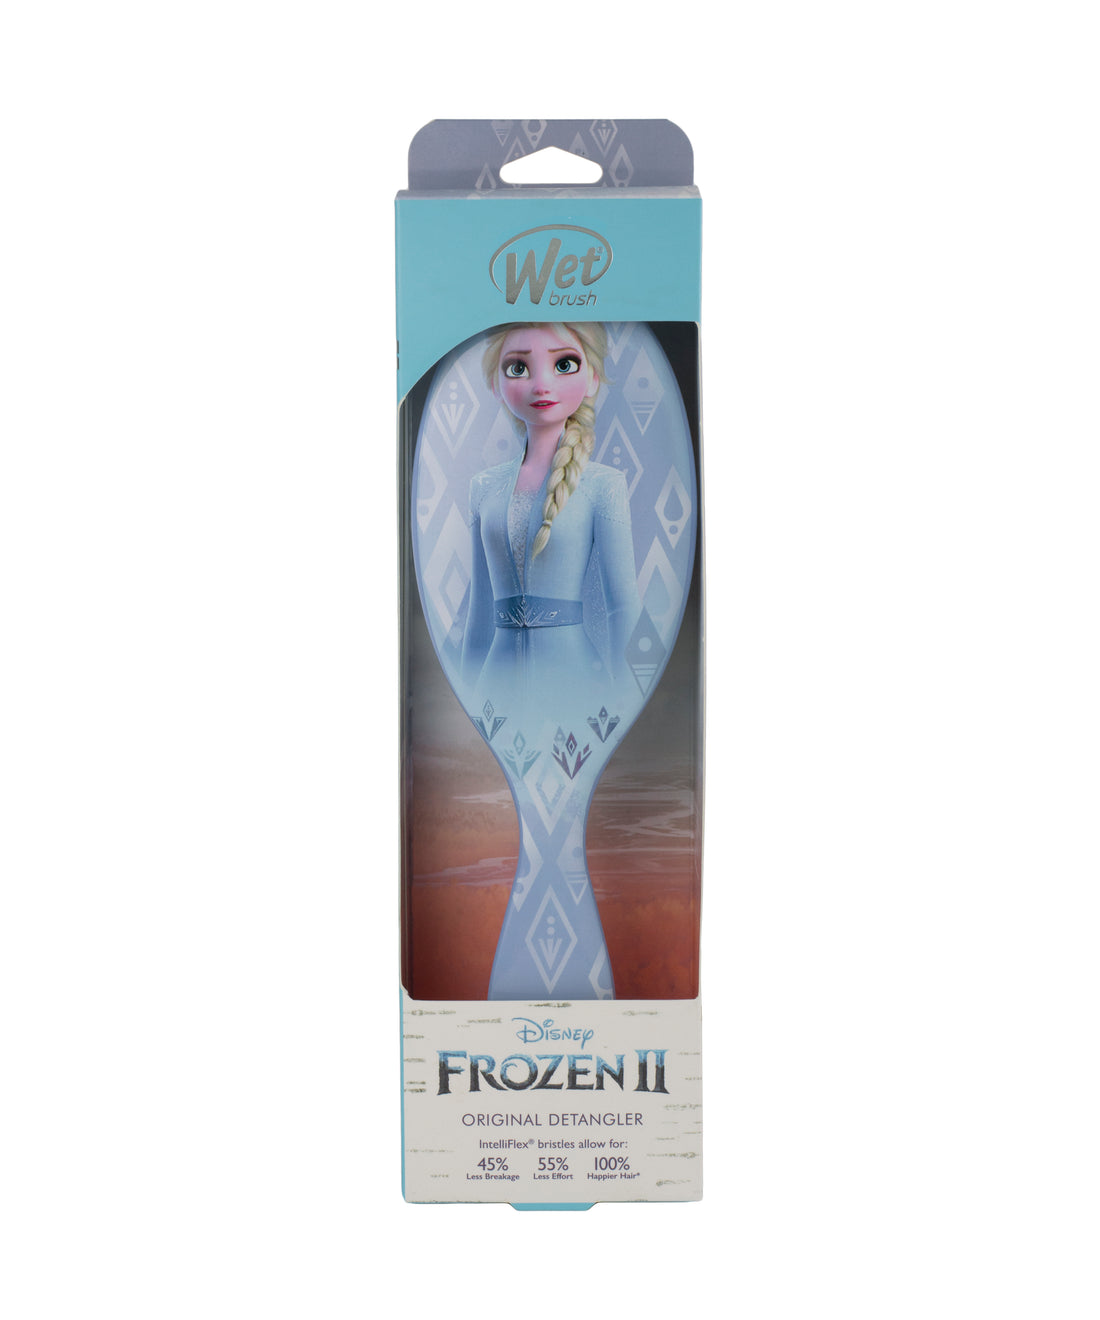 Original Detangler Frozen II - Elsa